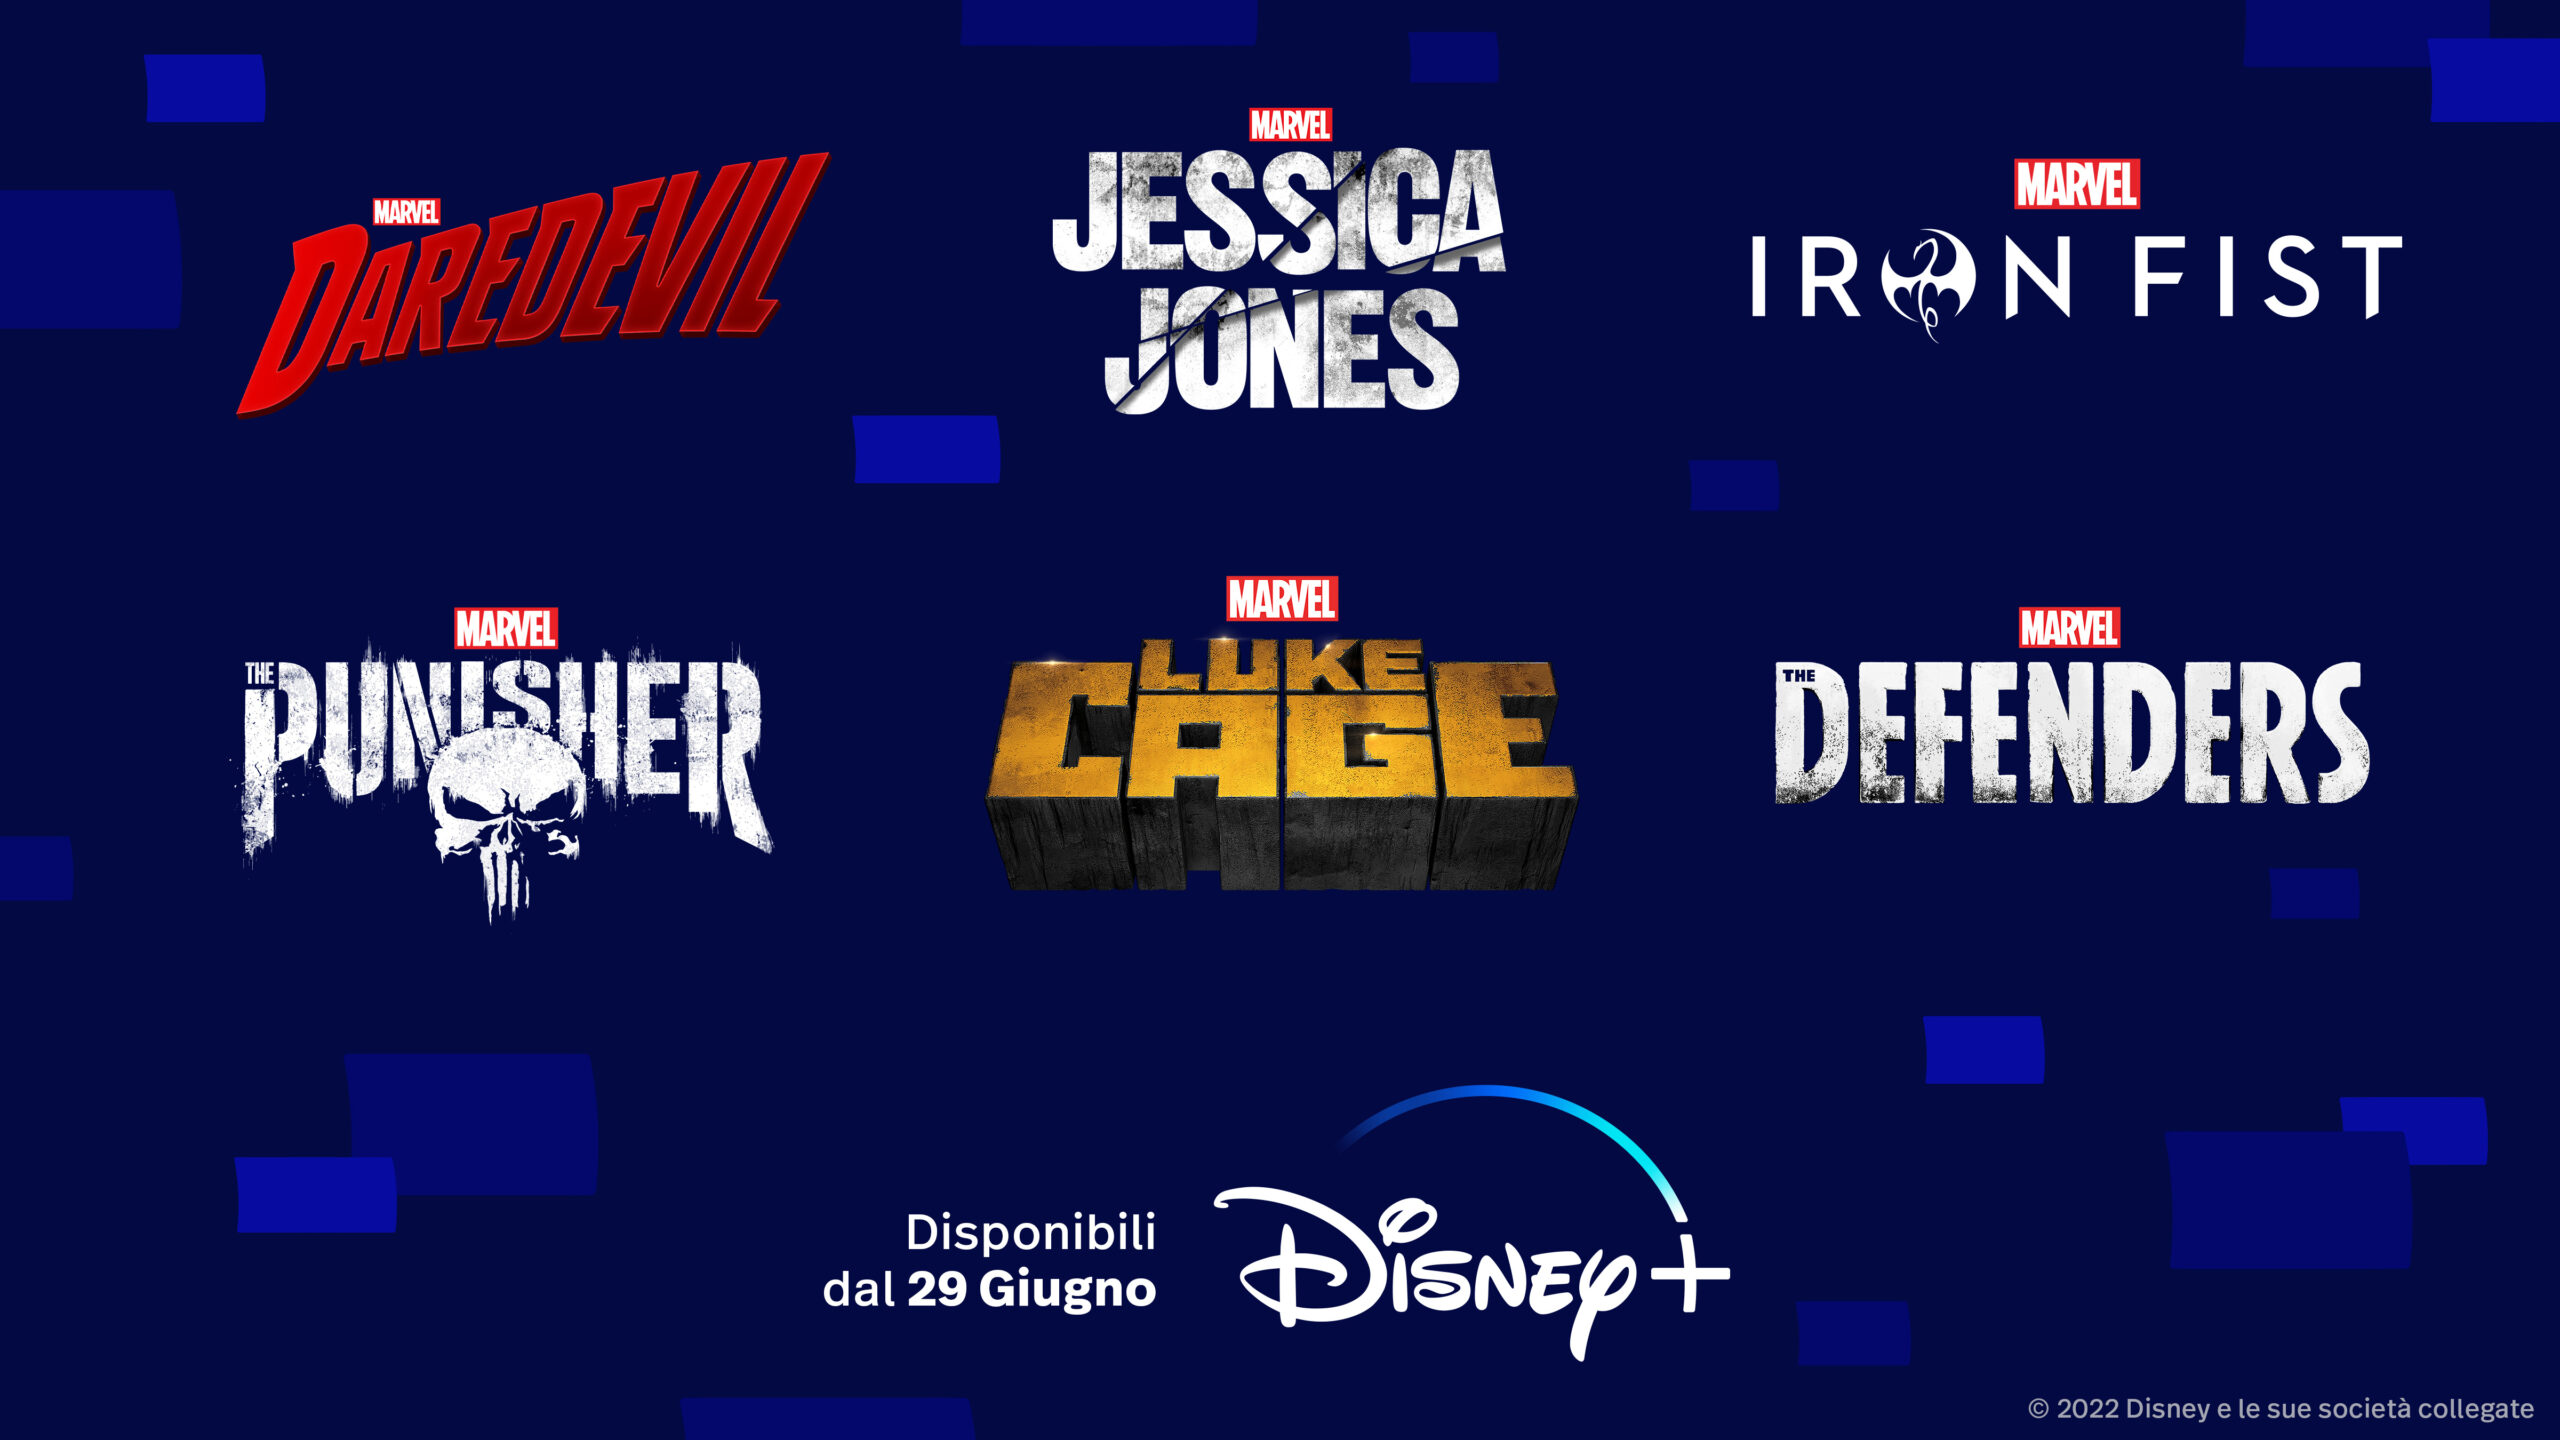 Daredevil, Jessica Jones, Luke Cage, Iron Fist, The Defenders e The Punisher su Disney Plus